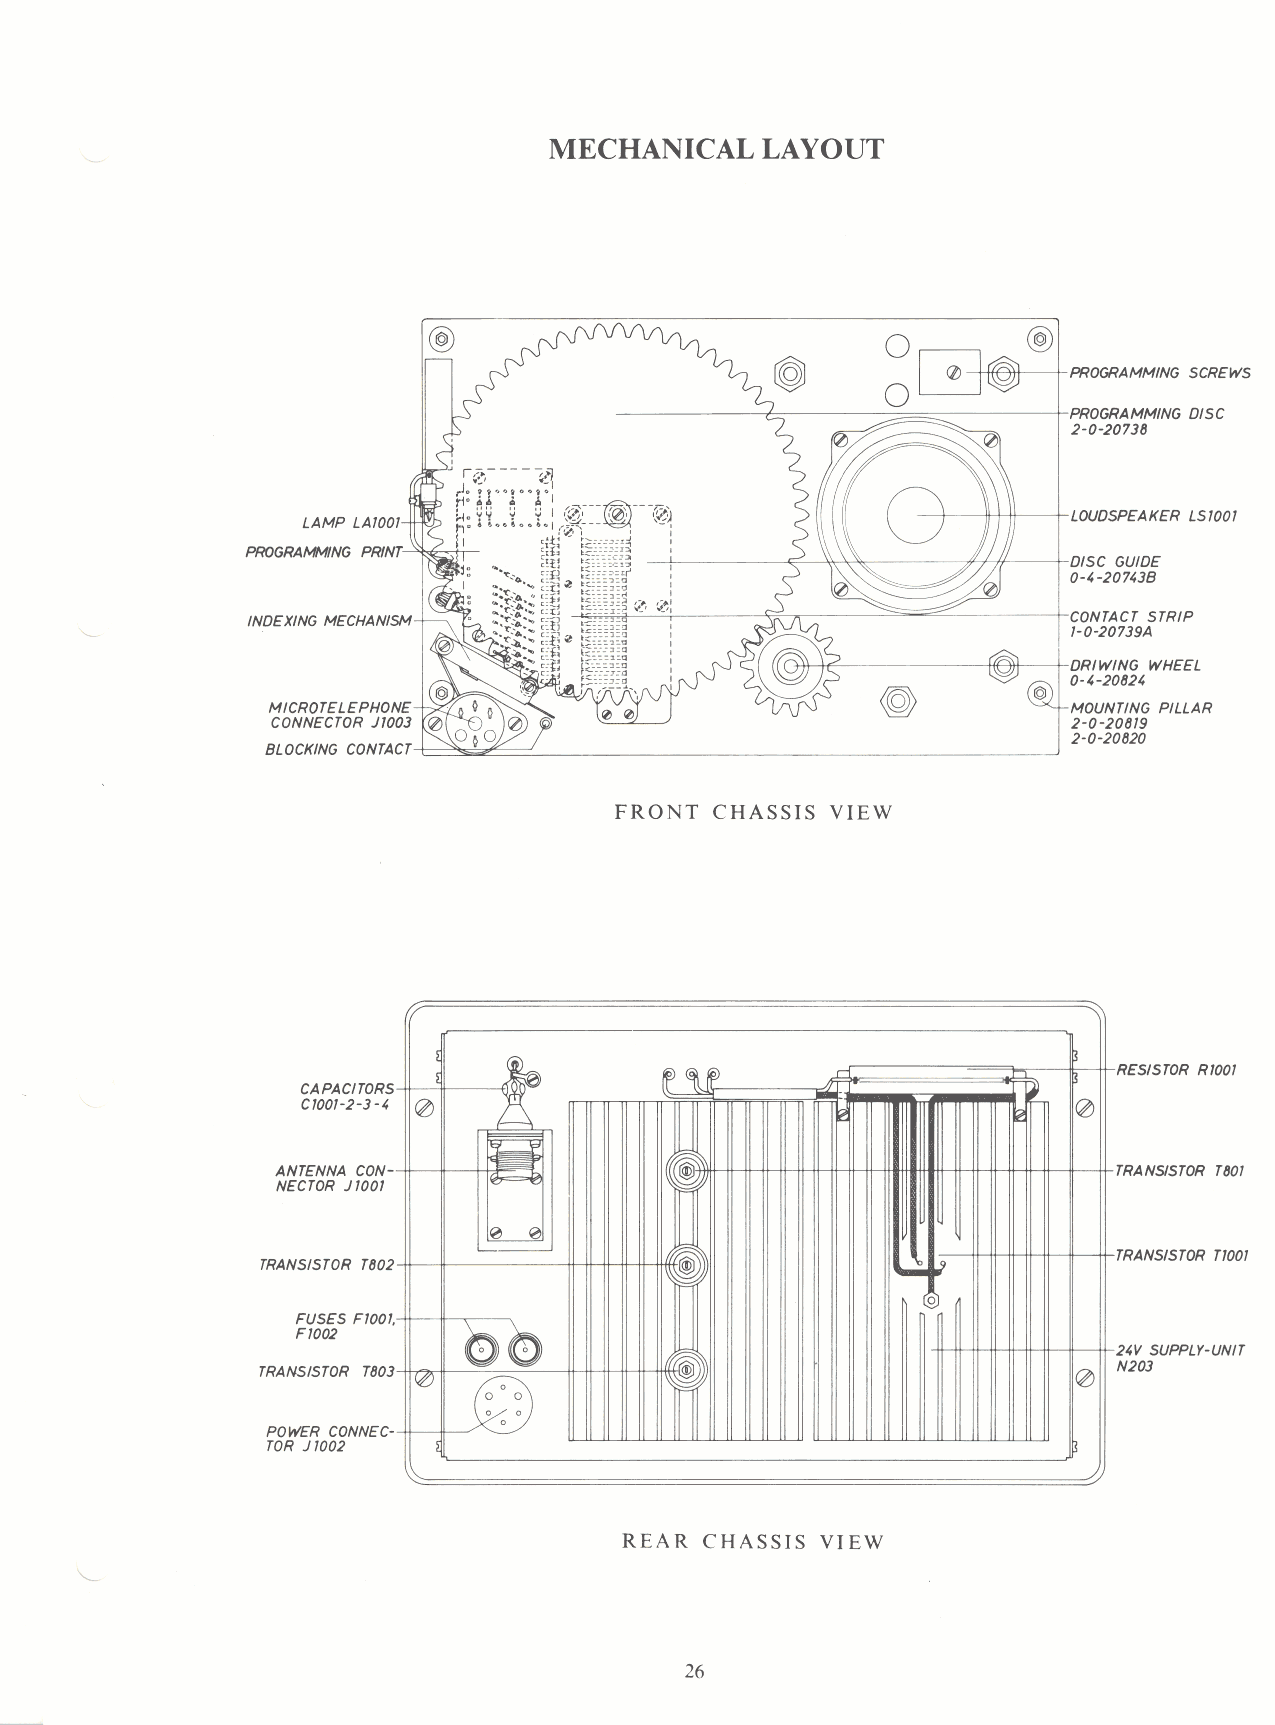 Mechanical layout-1